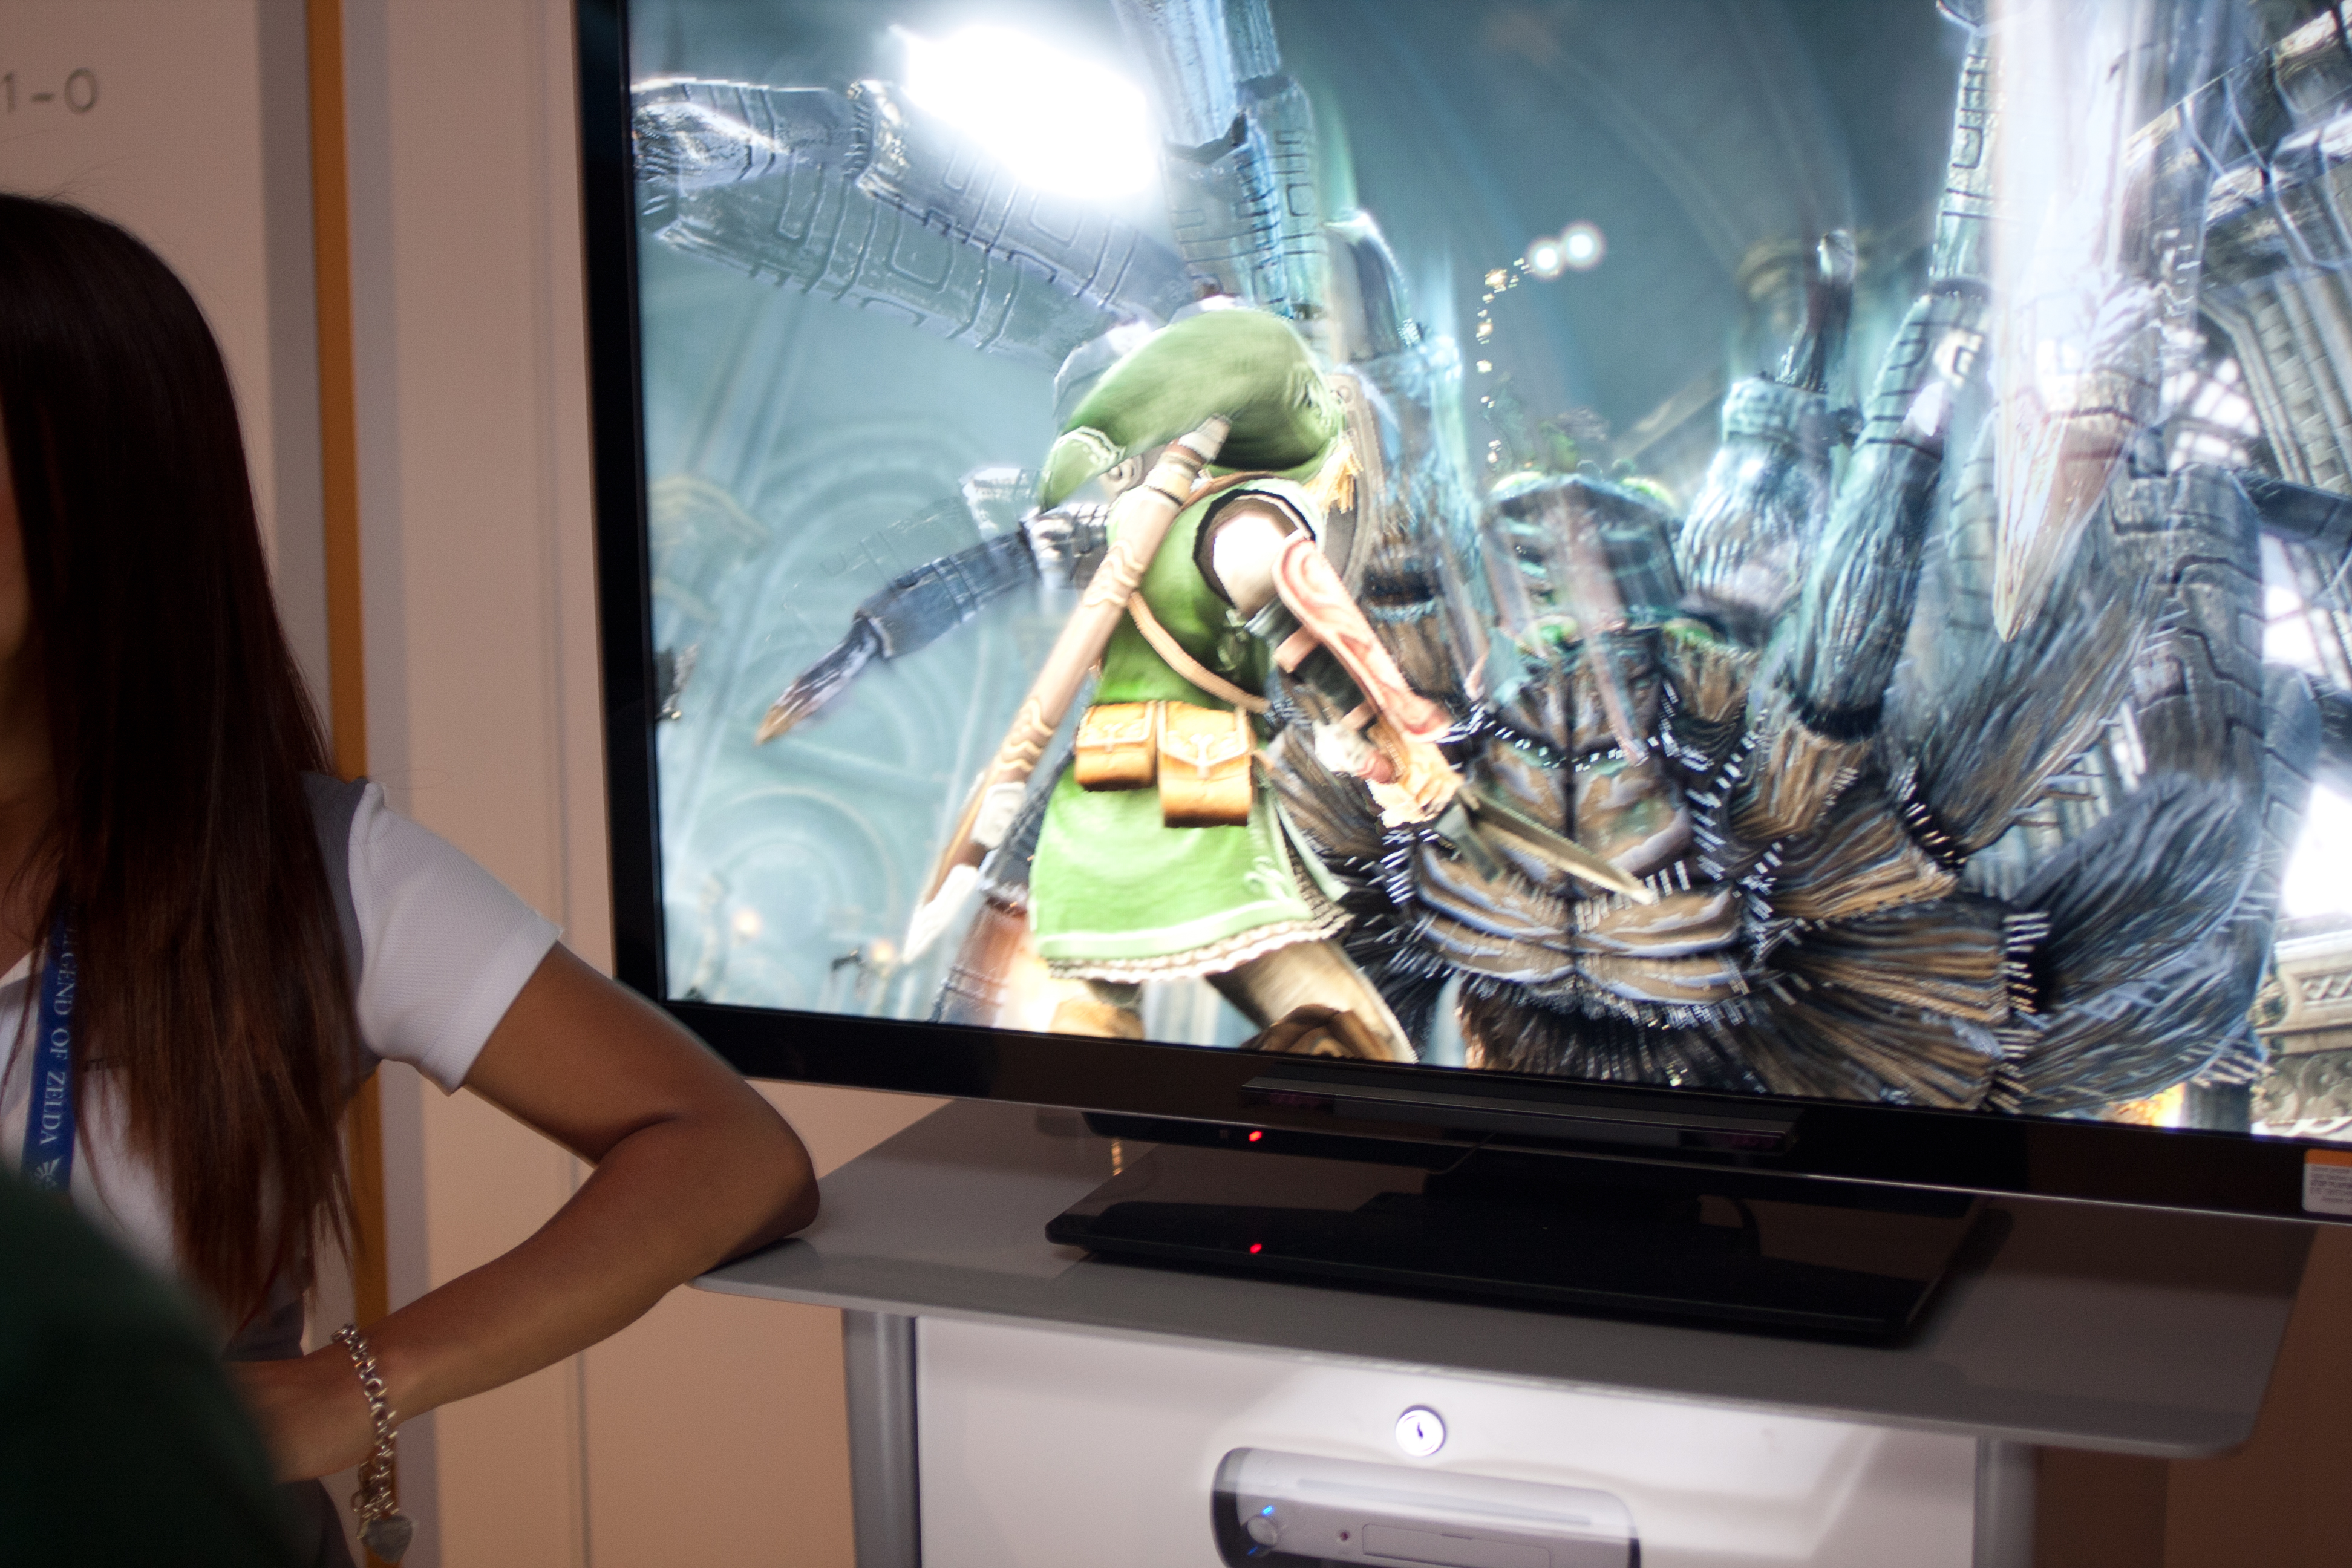 Nintendo Wii U console potente, parla Retro Studios (forse al lavoro su un nuovo Zelda)